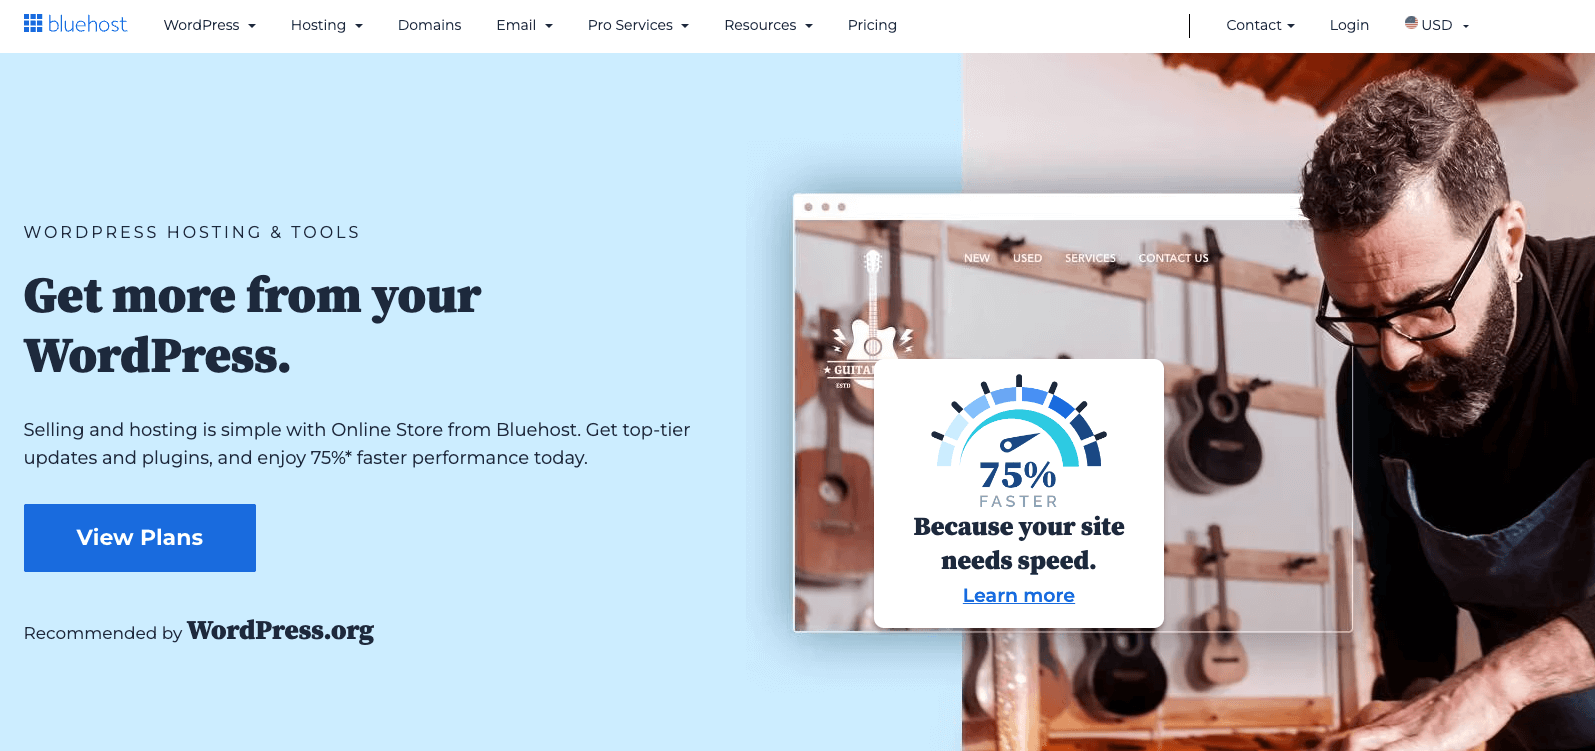 Bluehost cheap WordPress hosting Australia screenshot.